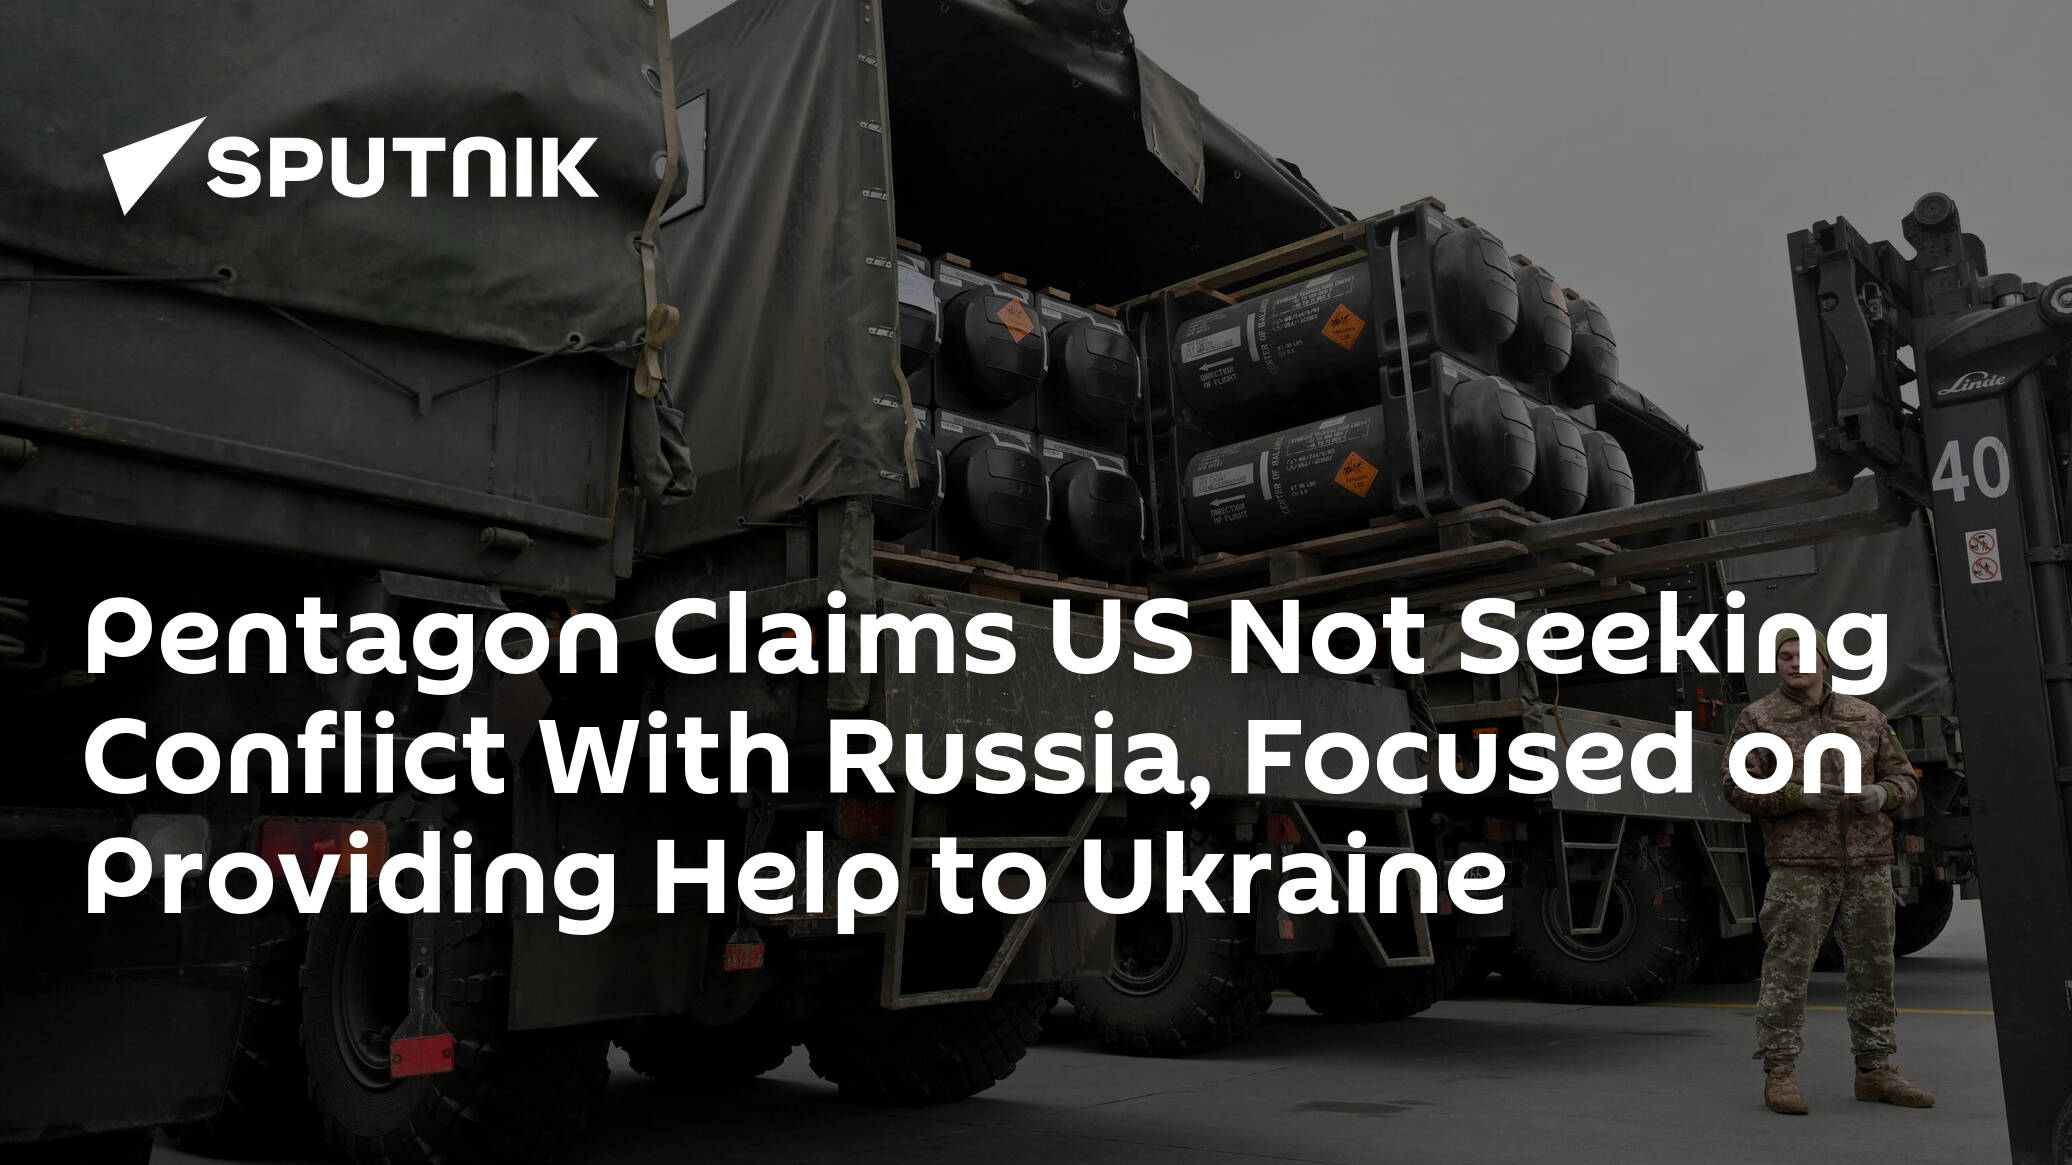 Pentagon Claims US Not Seeking Conflict With Russia, Focused on Providing Help to Ukraine - 16.12.2022, Sputnik International